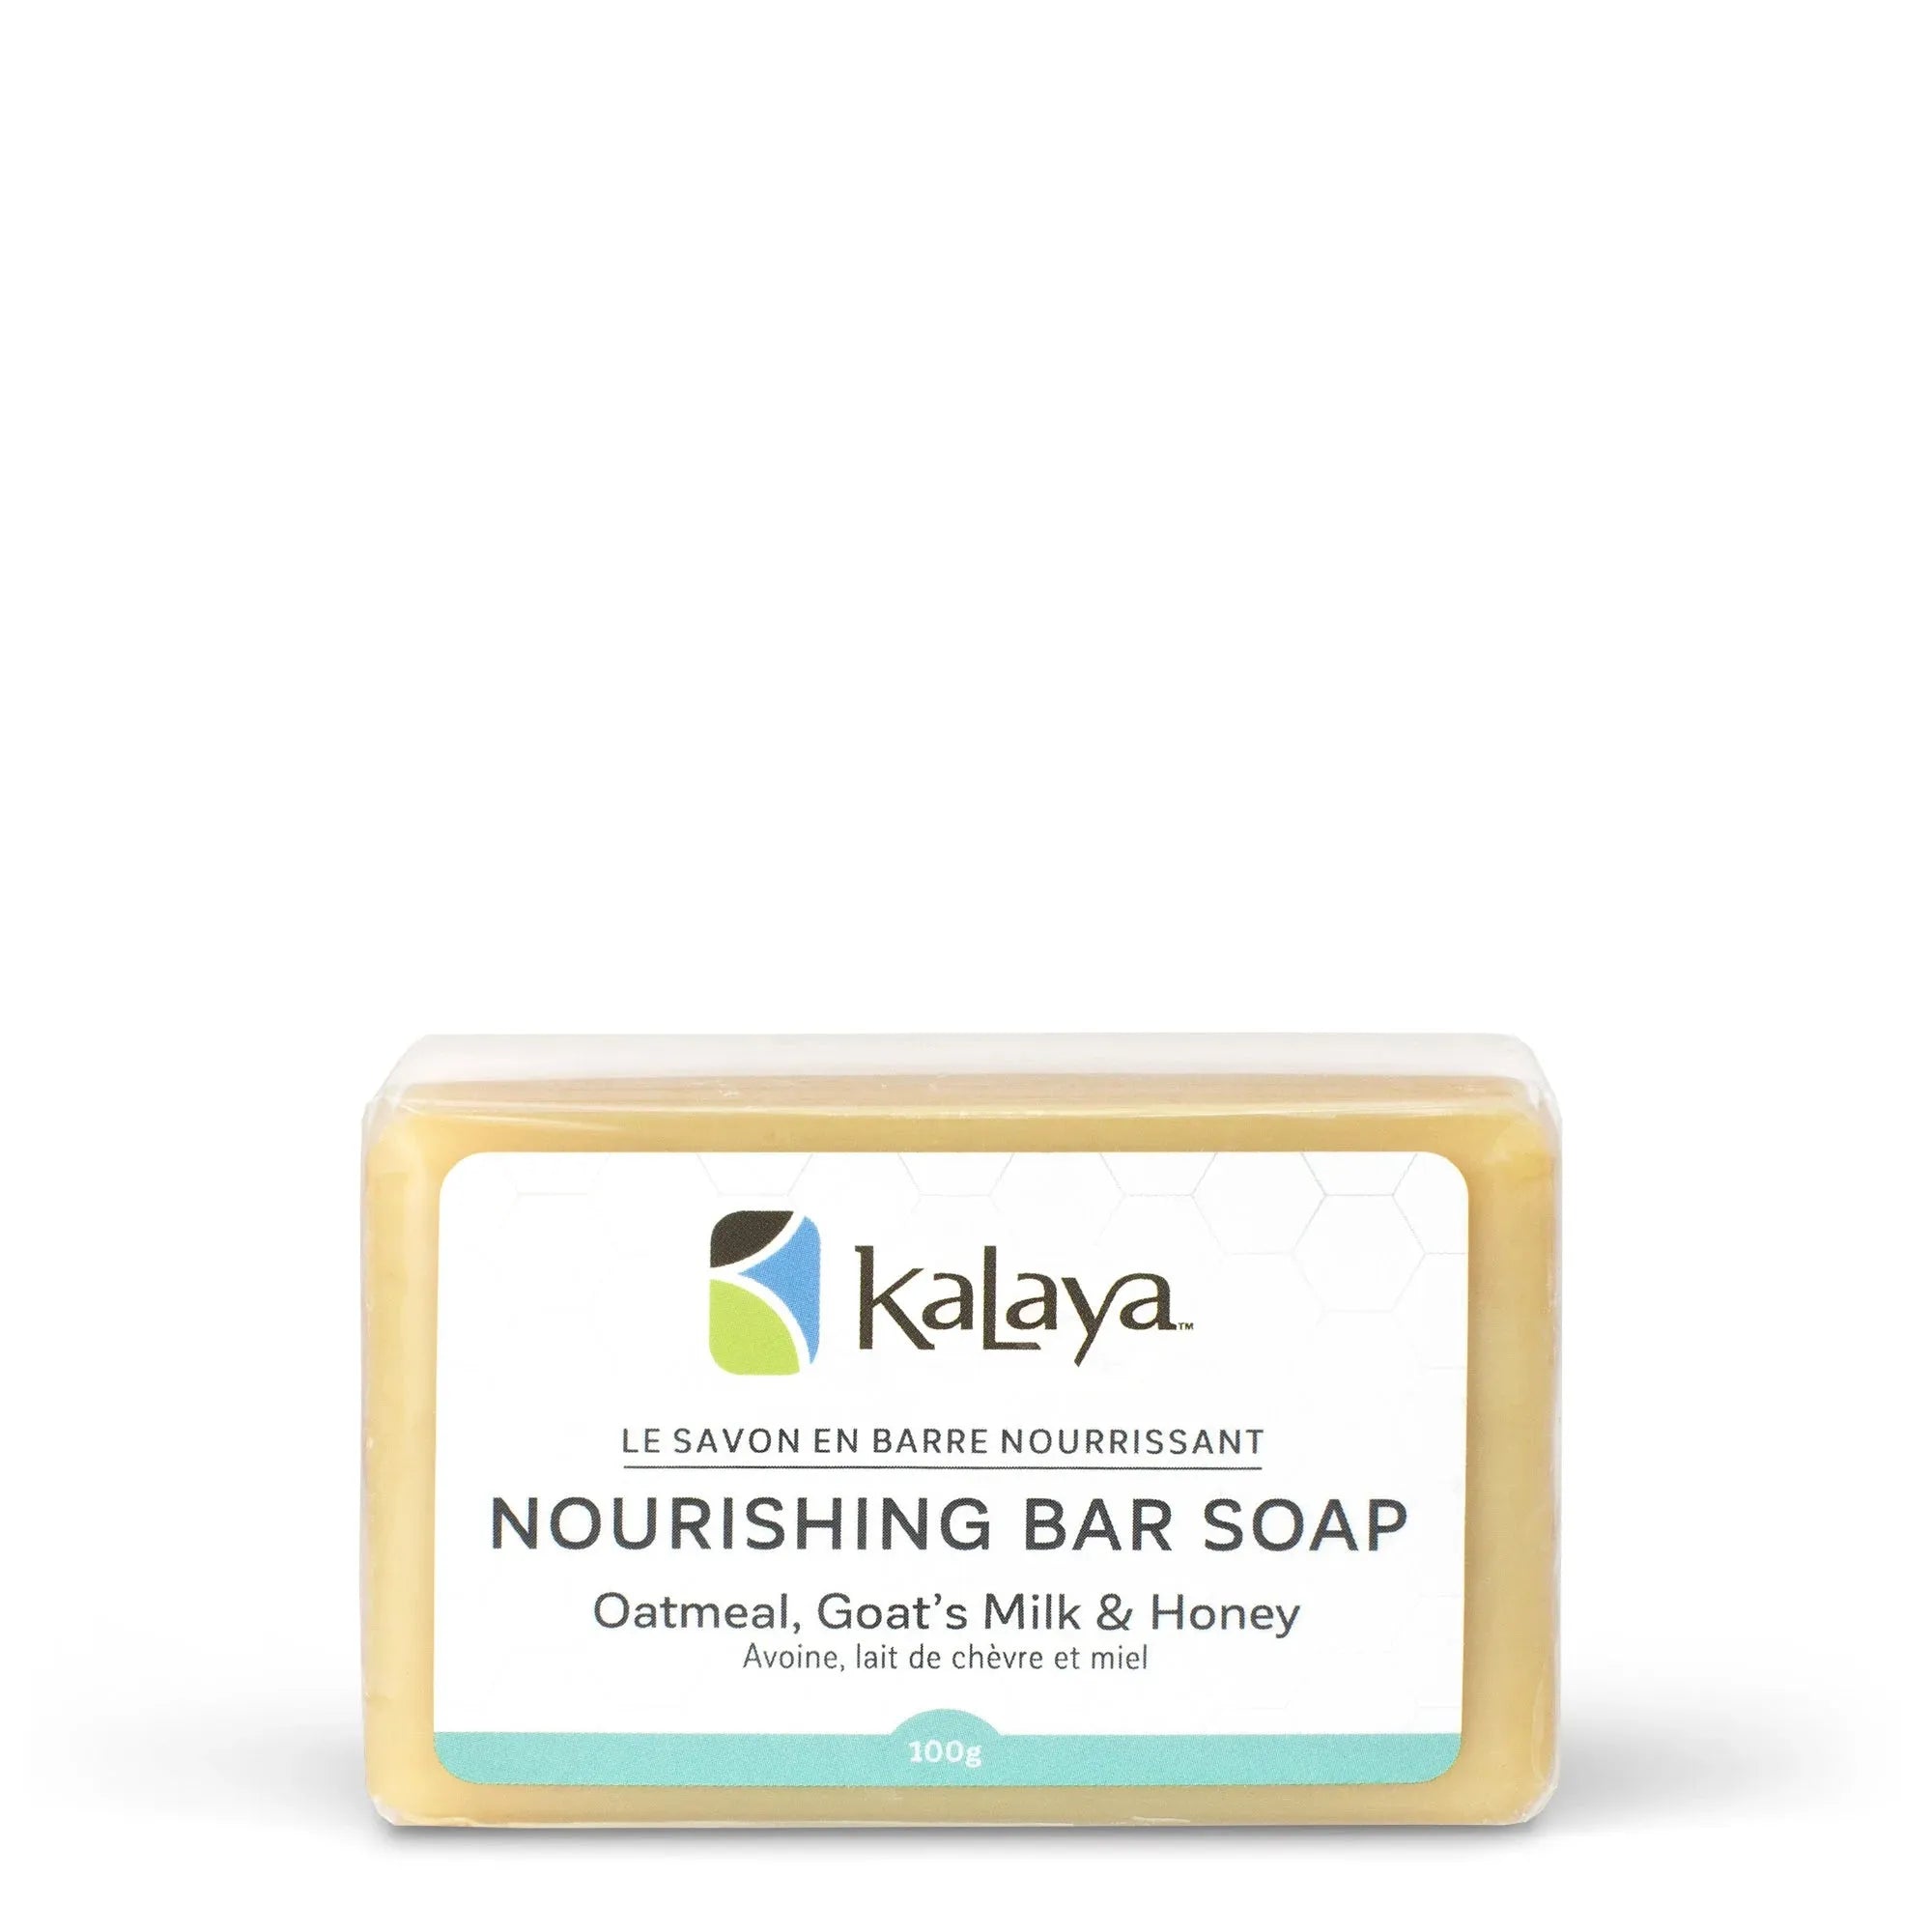 KaLaya Nourishing Bar Soap 100g